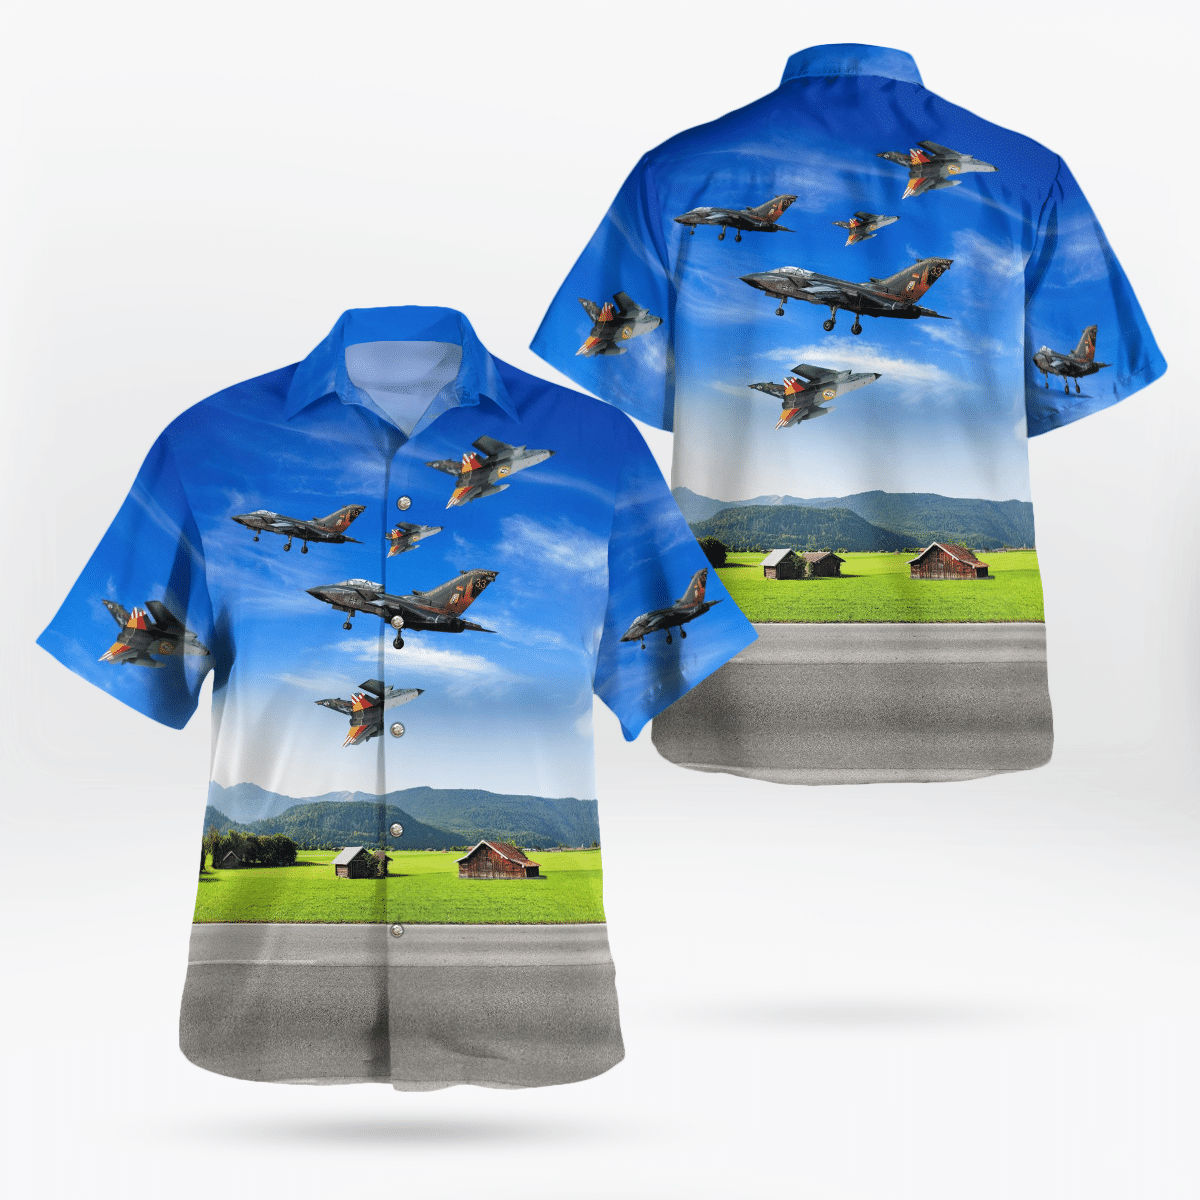 Get a new Hawaiian shirt to enjoy summer vacation 189